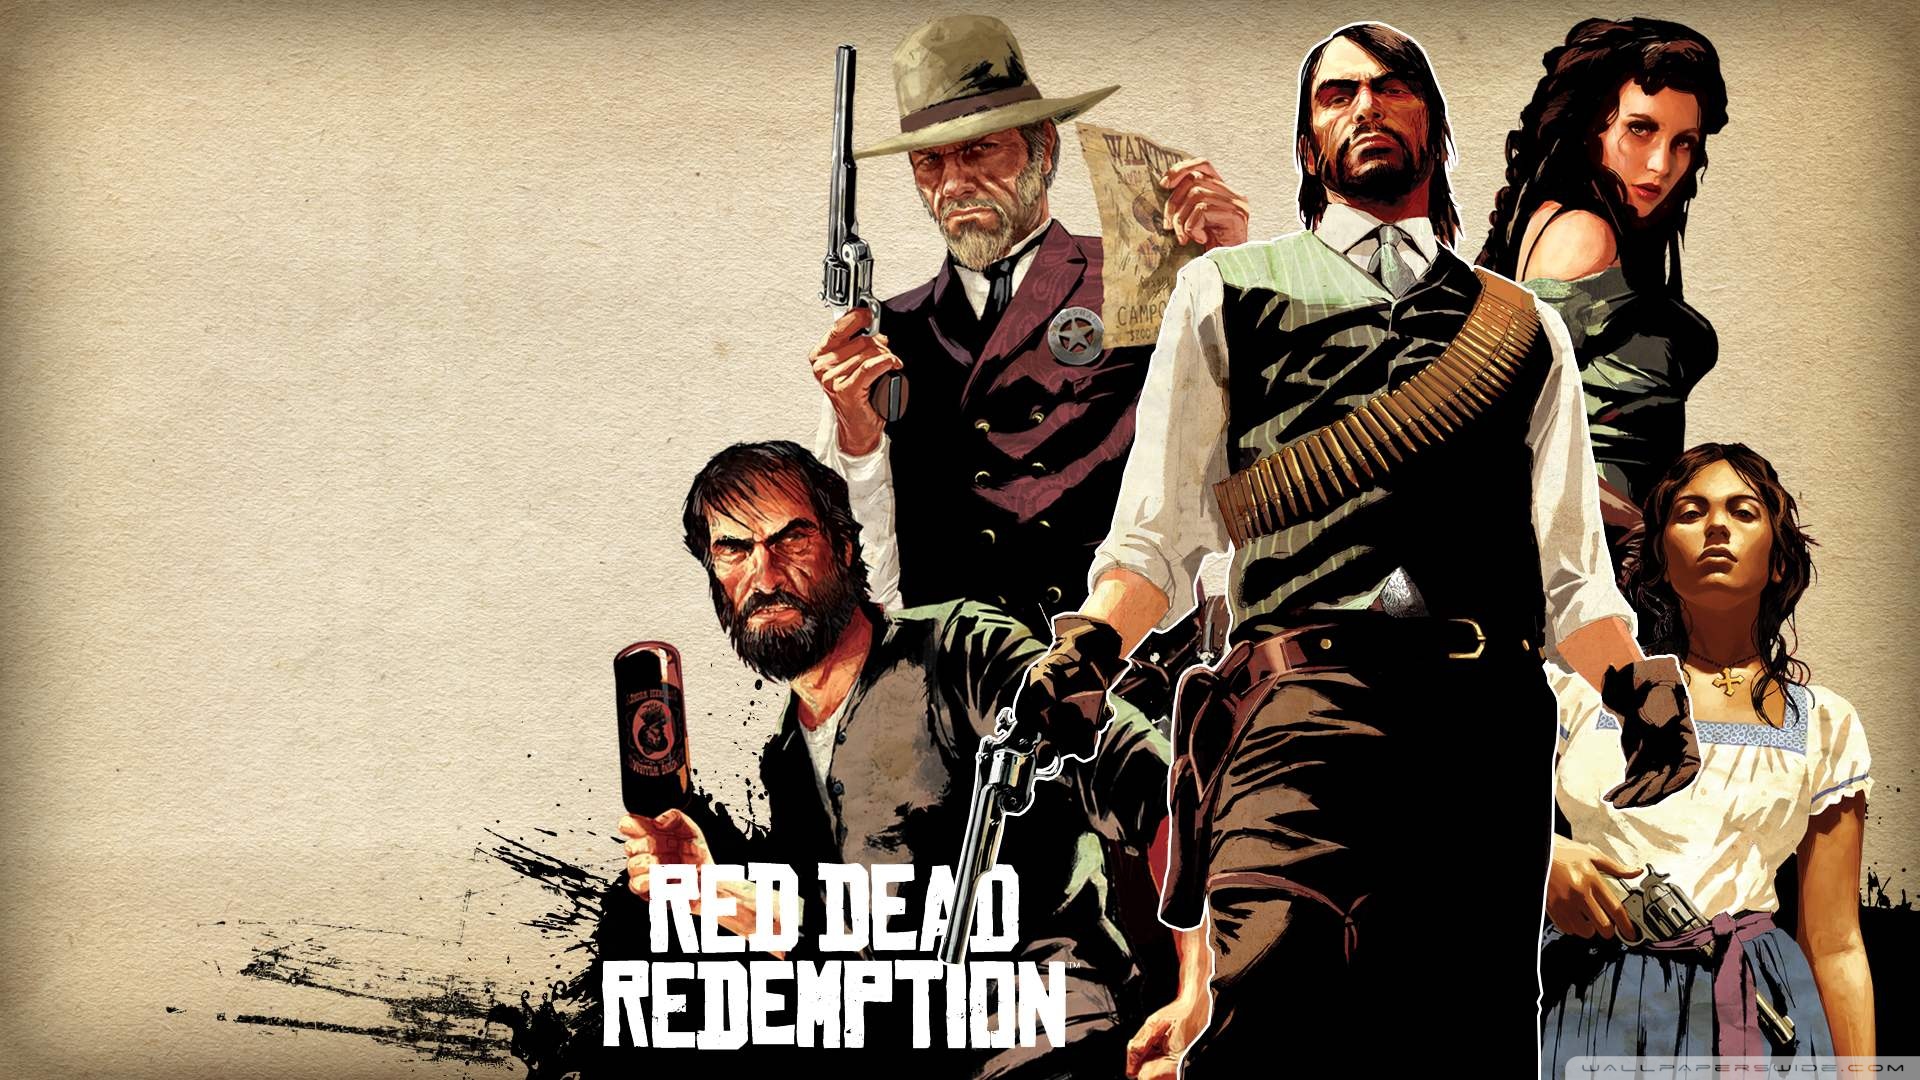 Hd Red Dead Redemption - 1920x1080 Wallpaper 